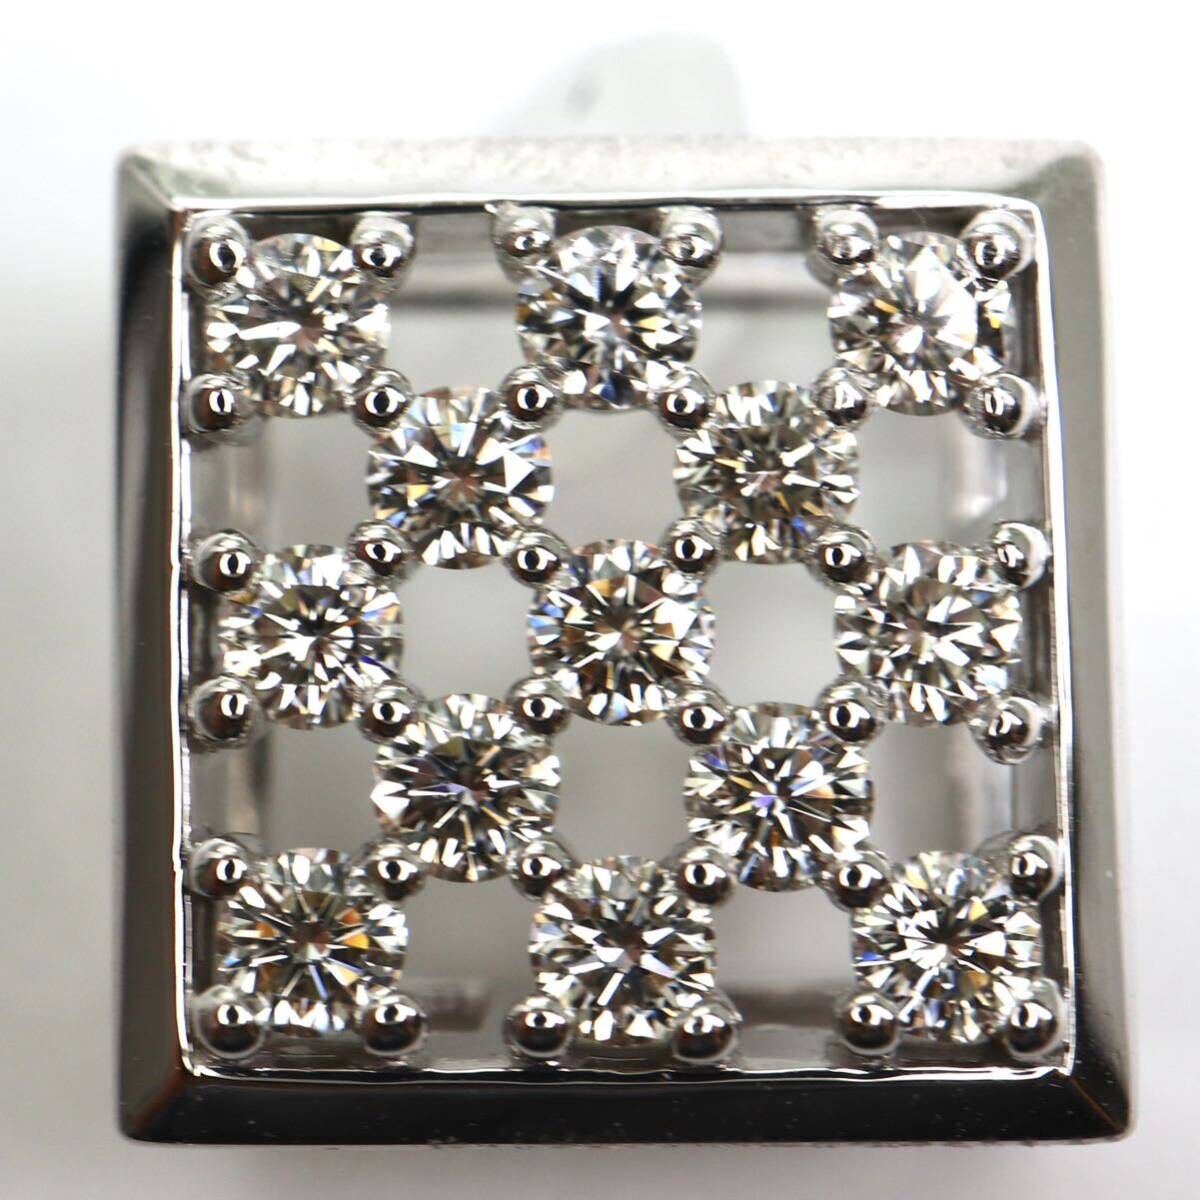 POLA Jewelry(ポーラジュエリー)《K18WG天然ダイヤモンドペンダントトップ》A 2.9g 0.42ct diamond pendant jewelry ジュエリー ED0/ED5の画像1